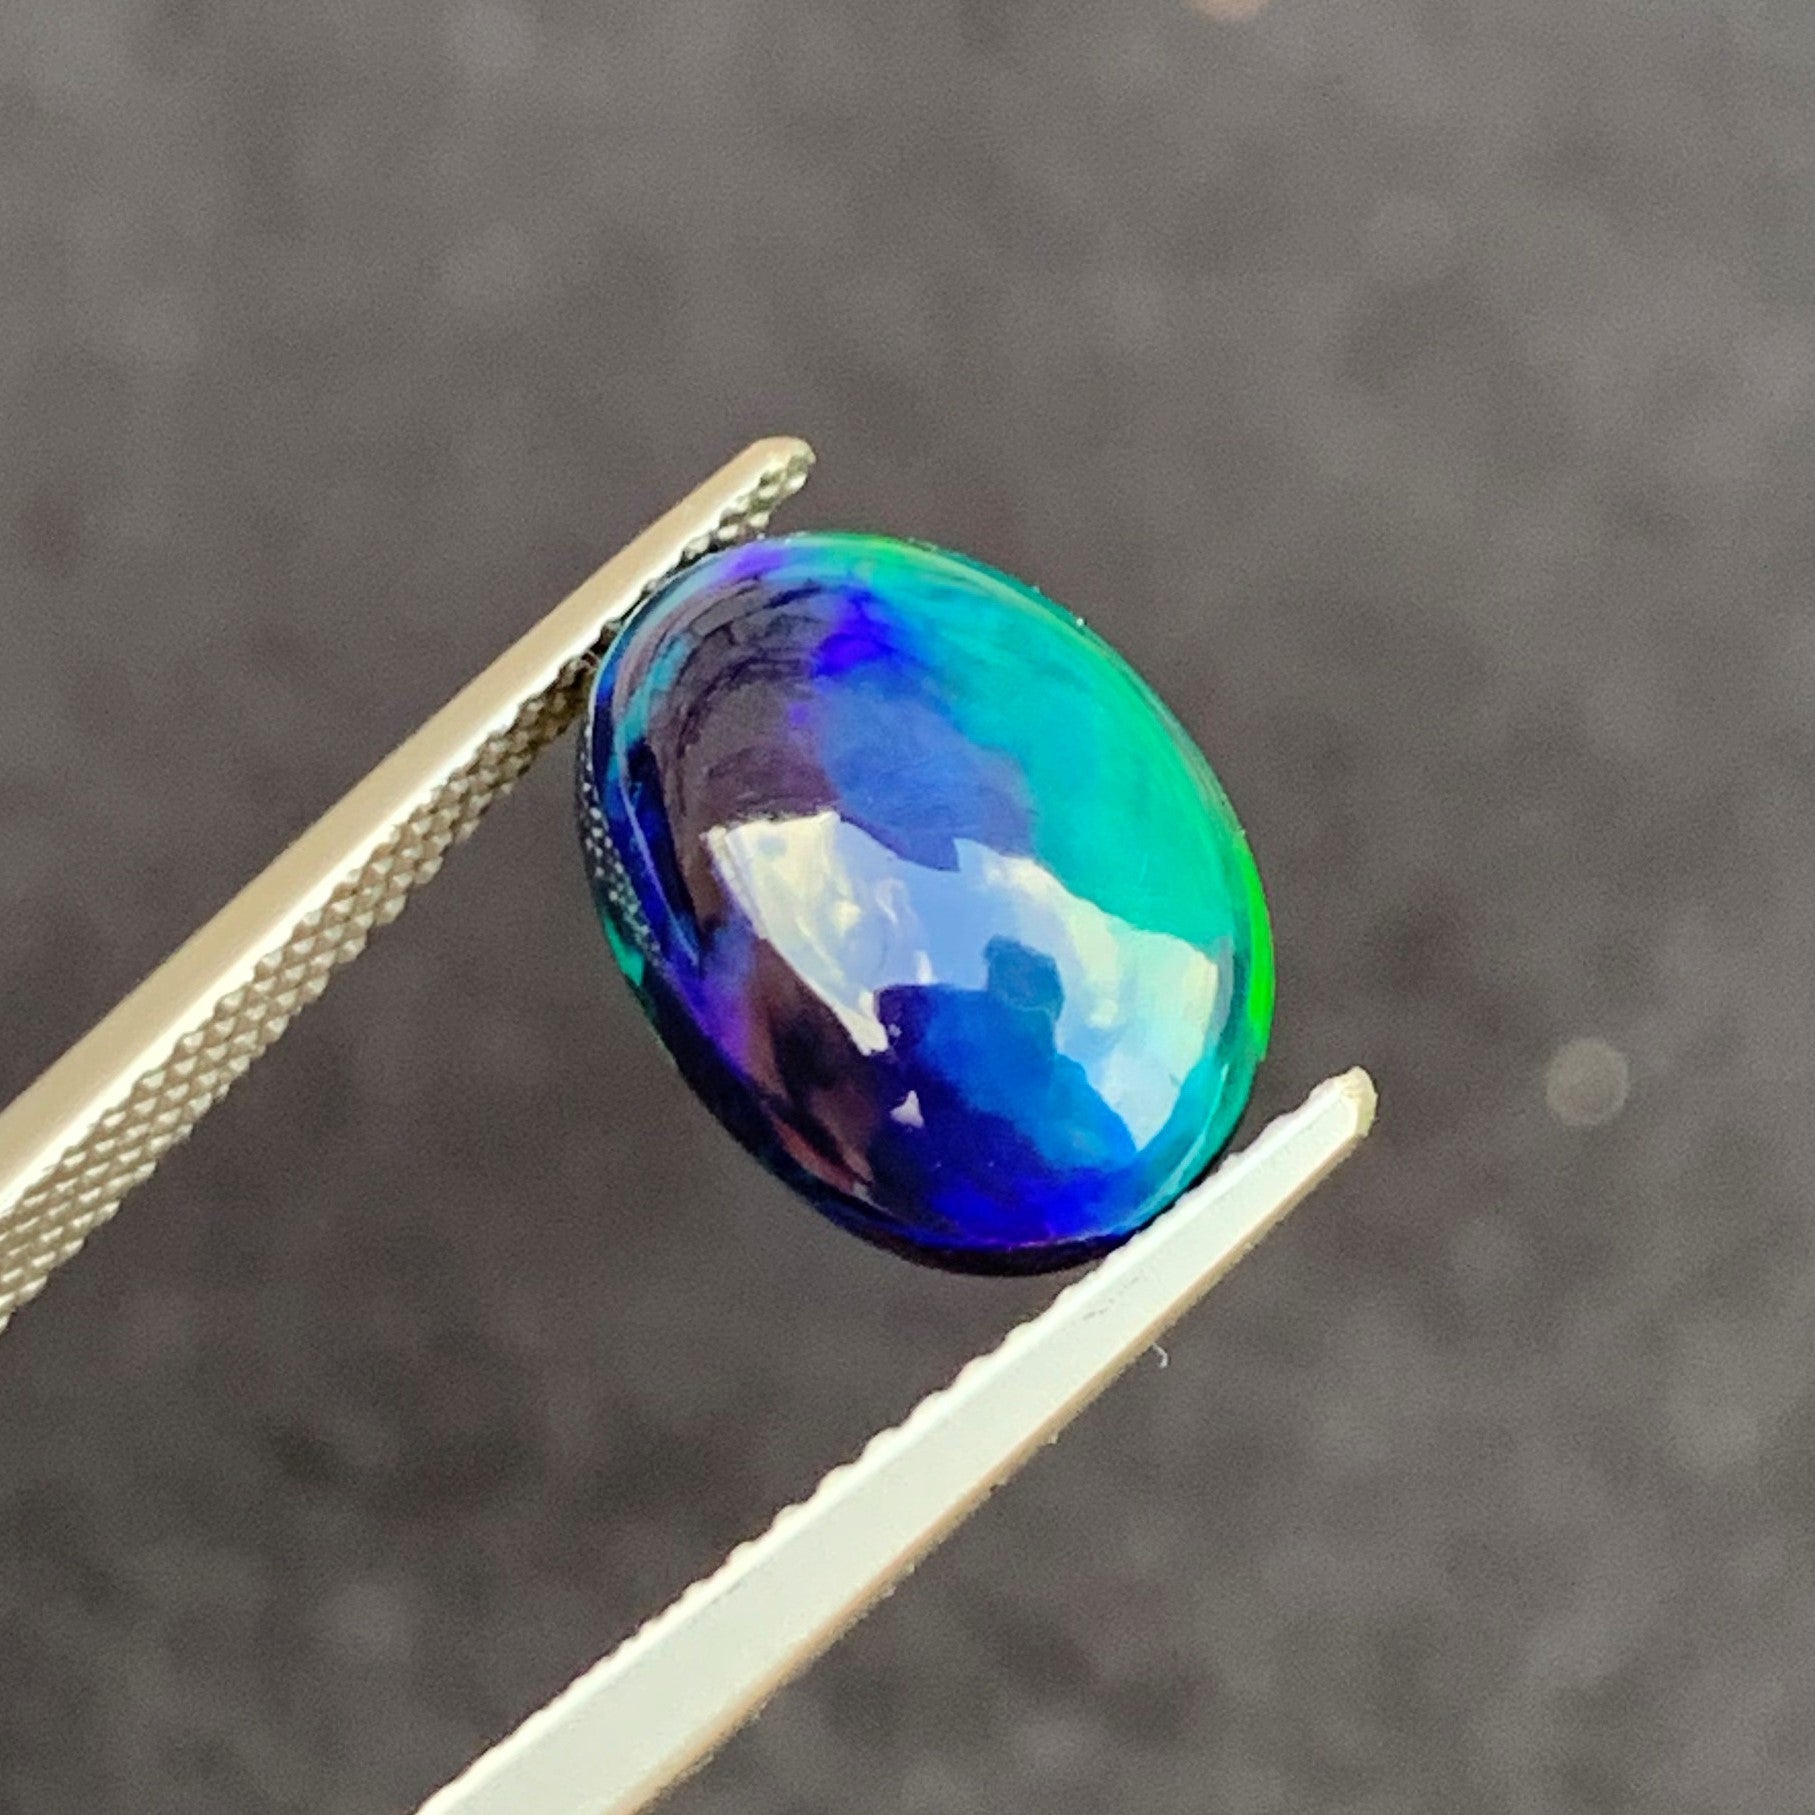 Blue Ethiopia opal stone